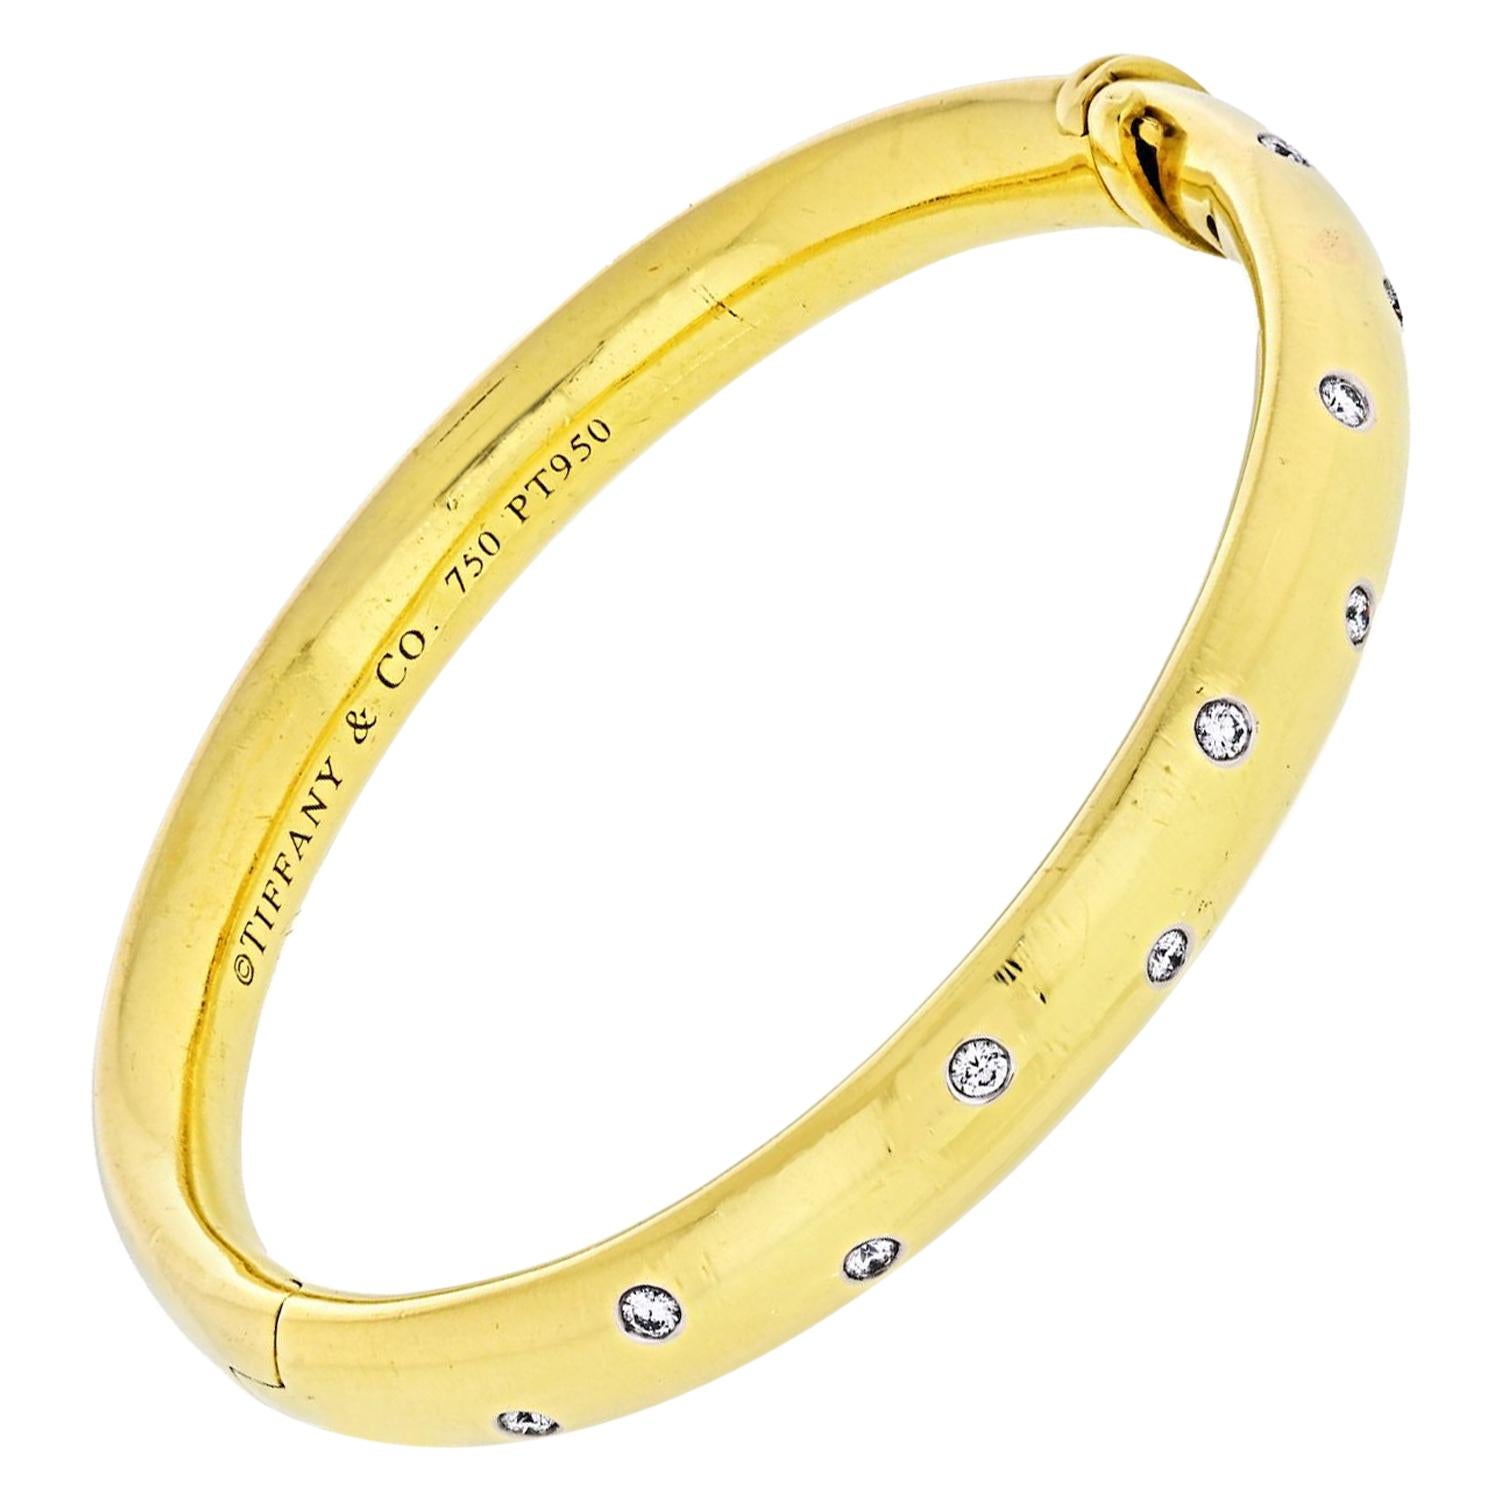 Tiffany & Co. Etoile 18K Yellow Gold 0.40 carat Diamond Bangle